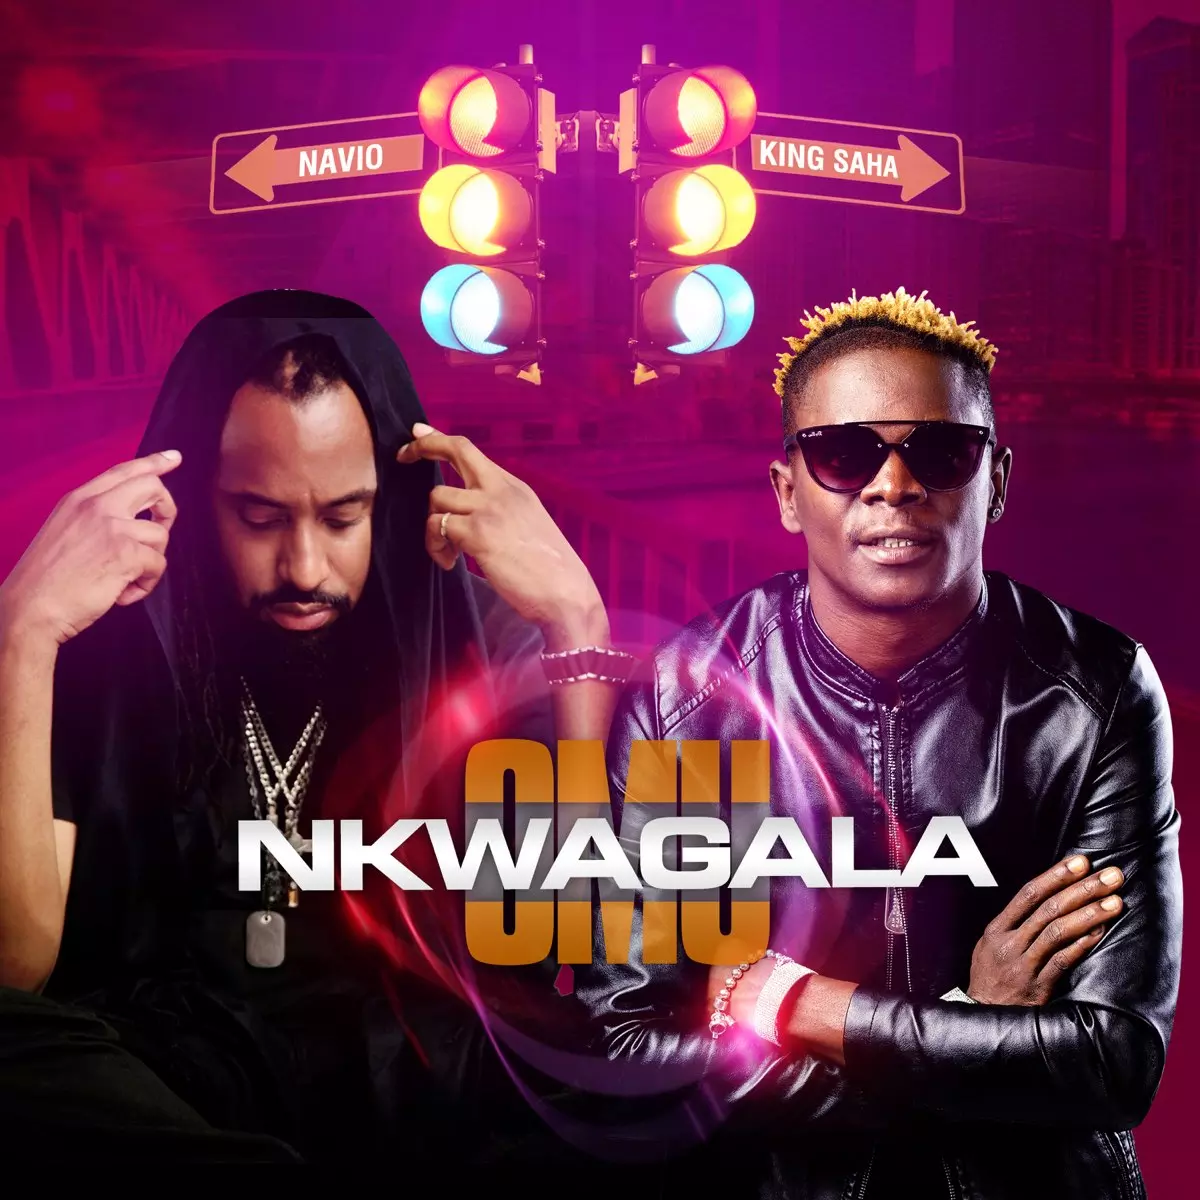 Nkwagala Omu - Single by King Saha & Navio on Apple Music